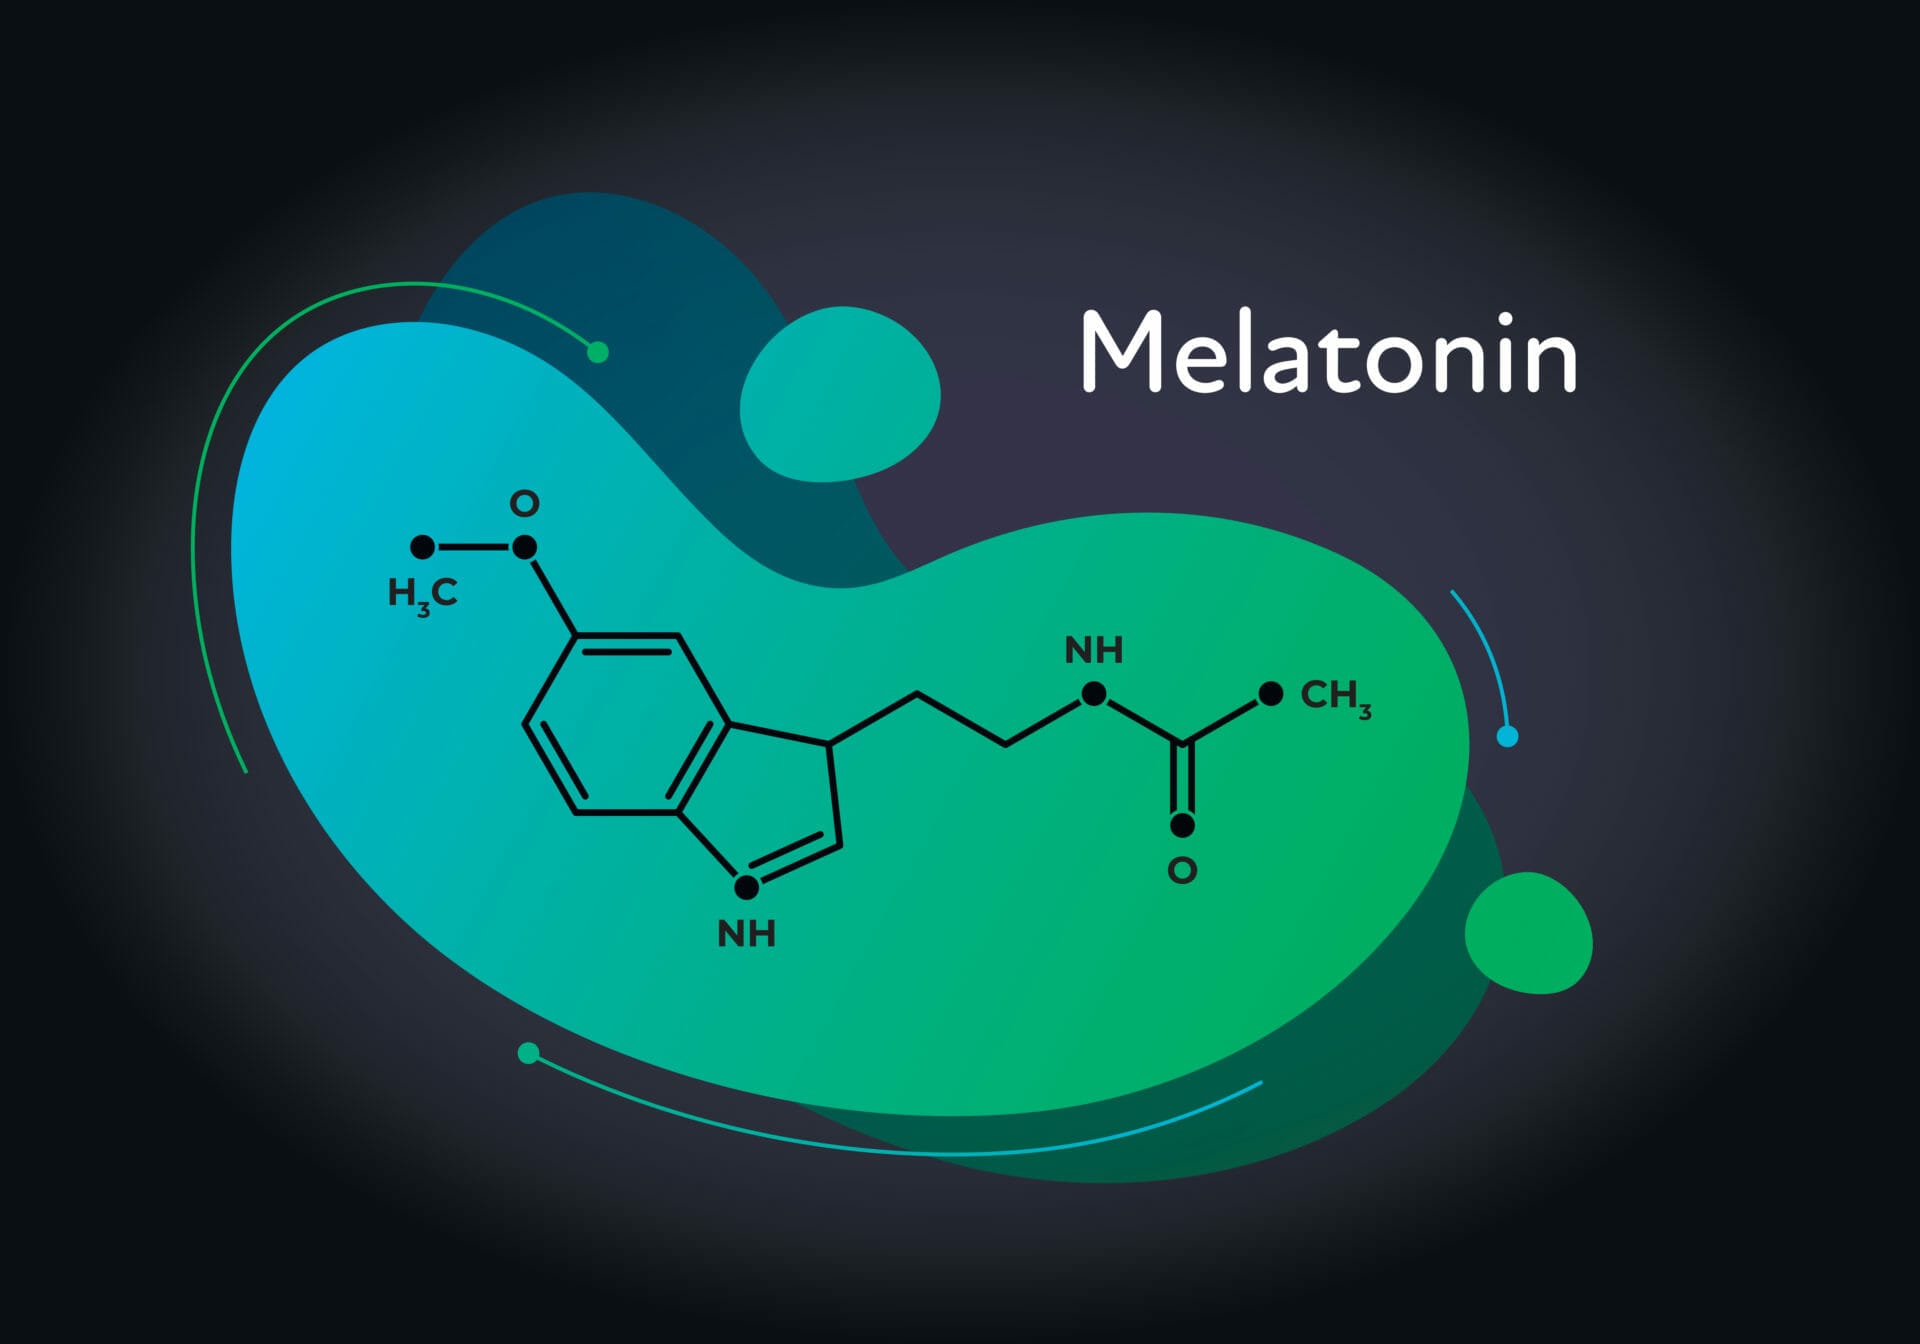 Melatonin is a powerful sleep hormone